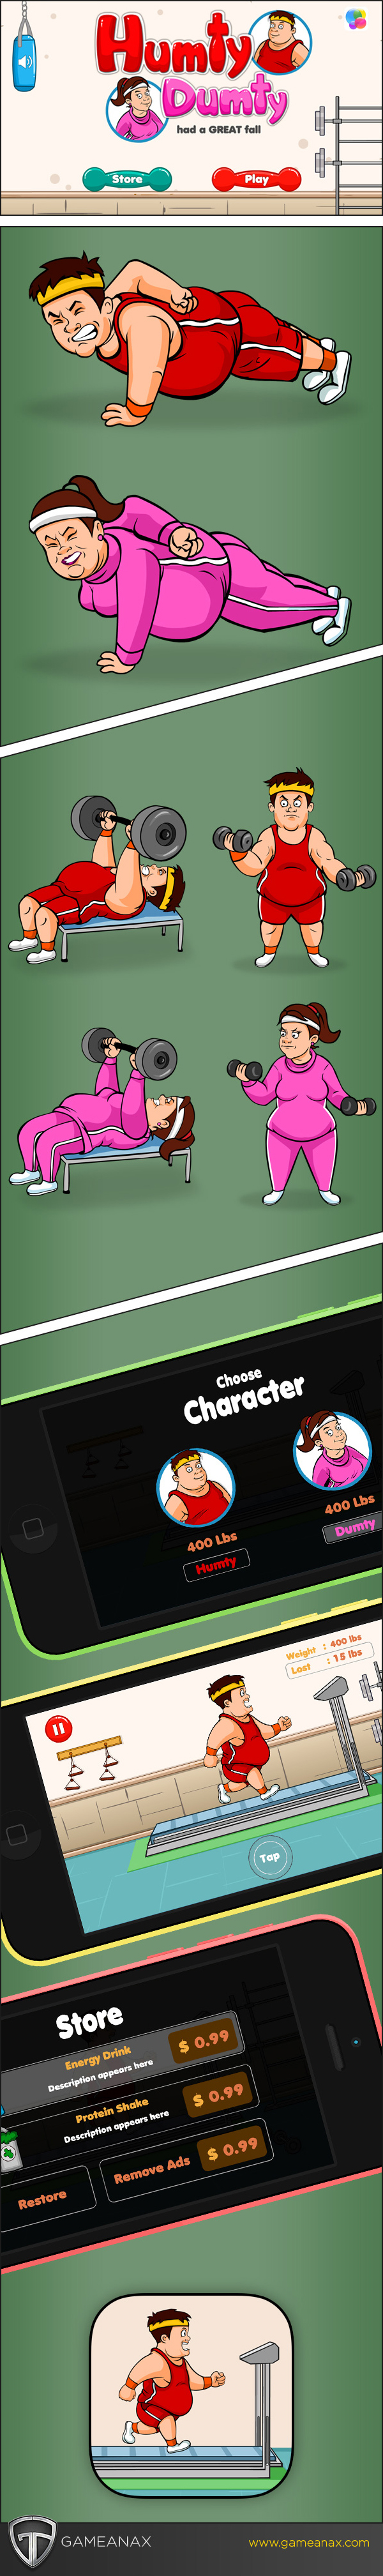 mobile gaming Gaming Games iphone iPad Entertainment Fun fitness